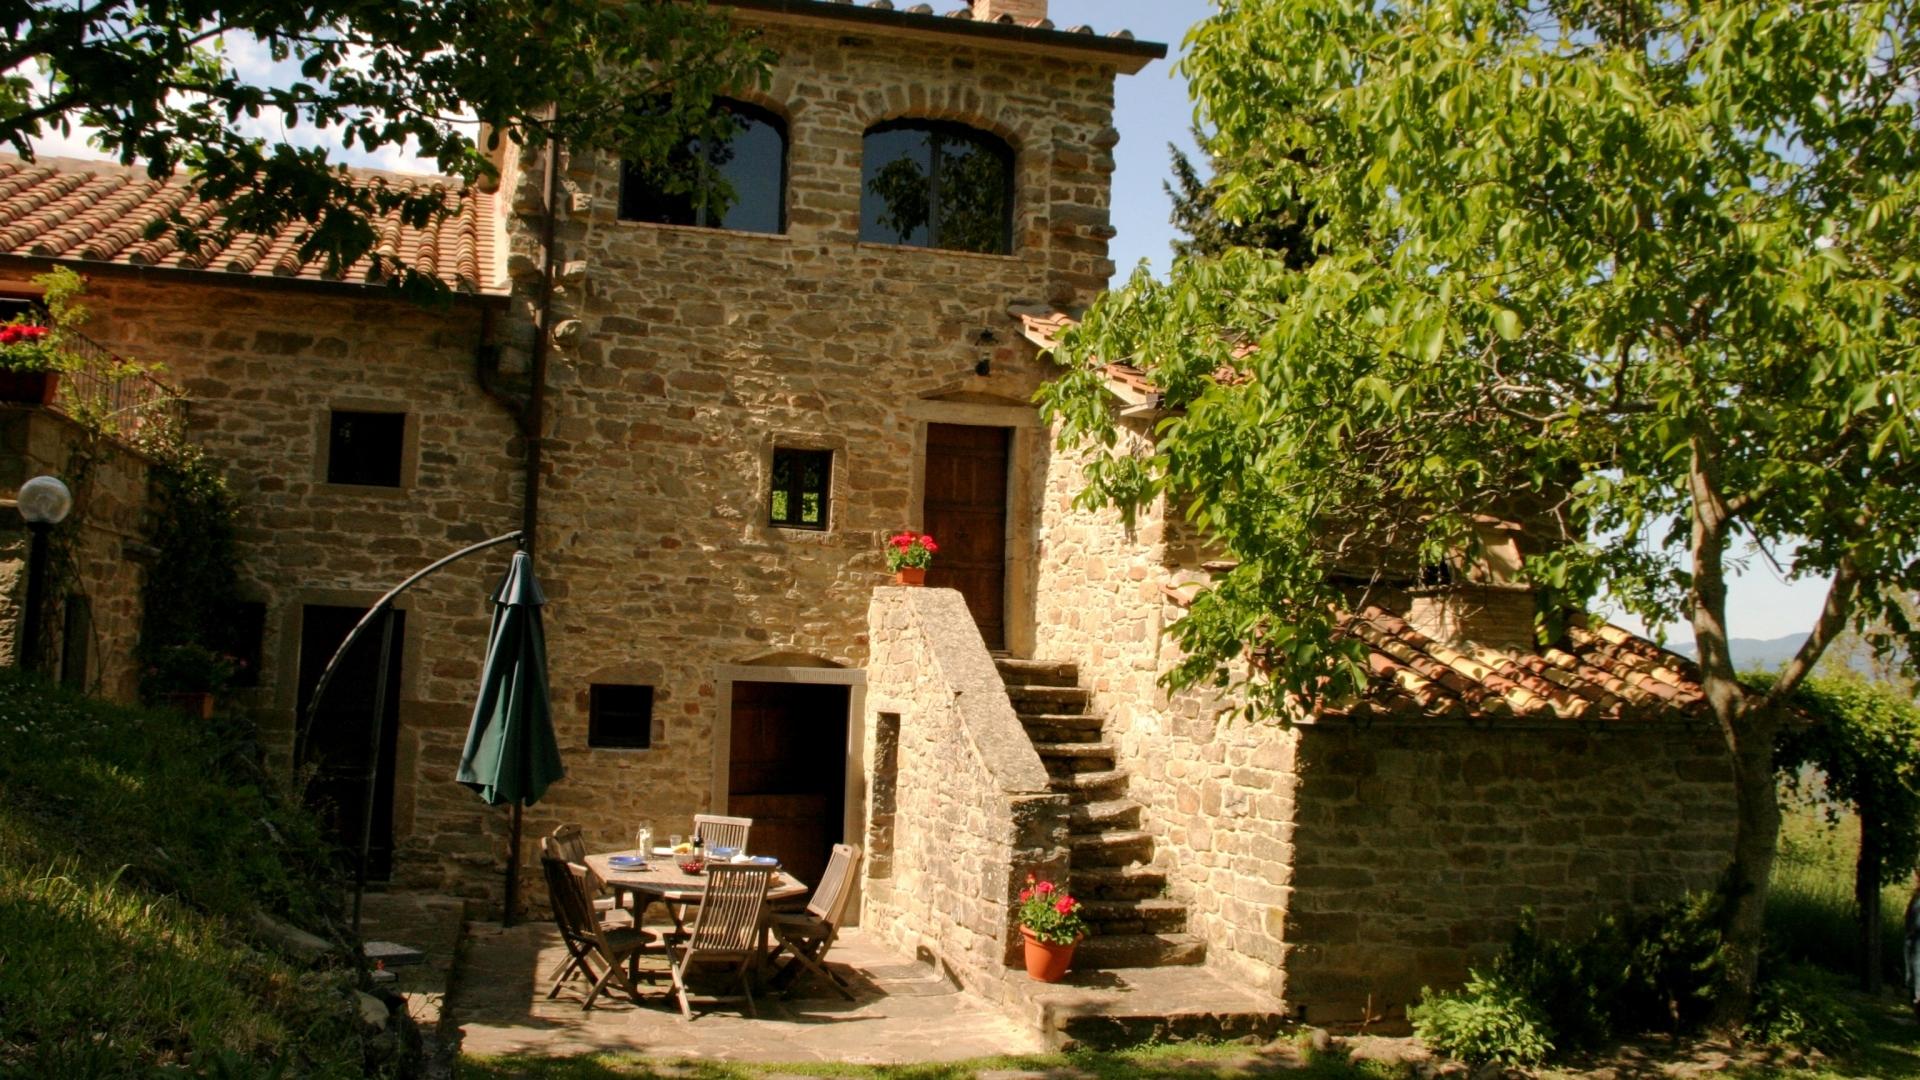 5 Bedroom Private villa in  Italy